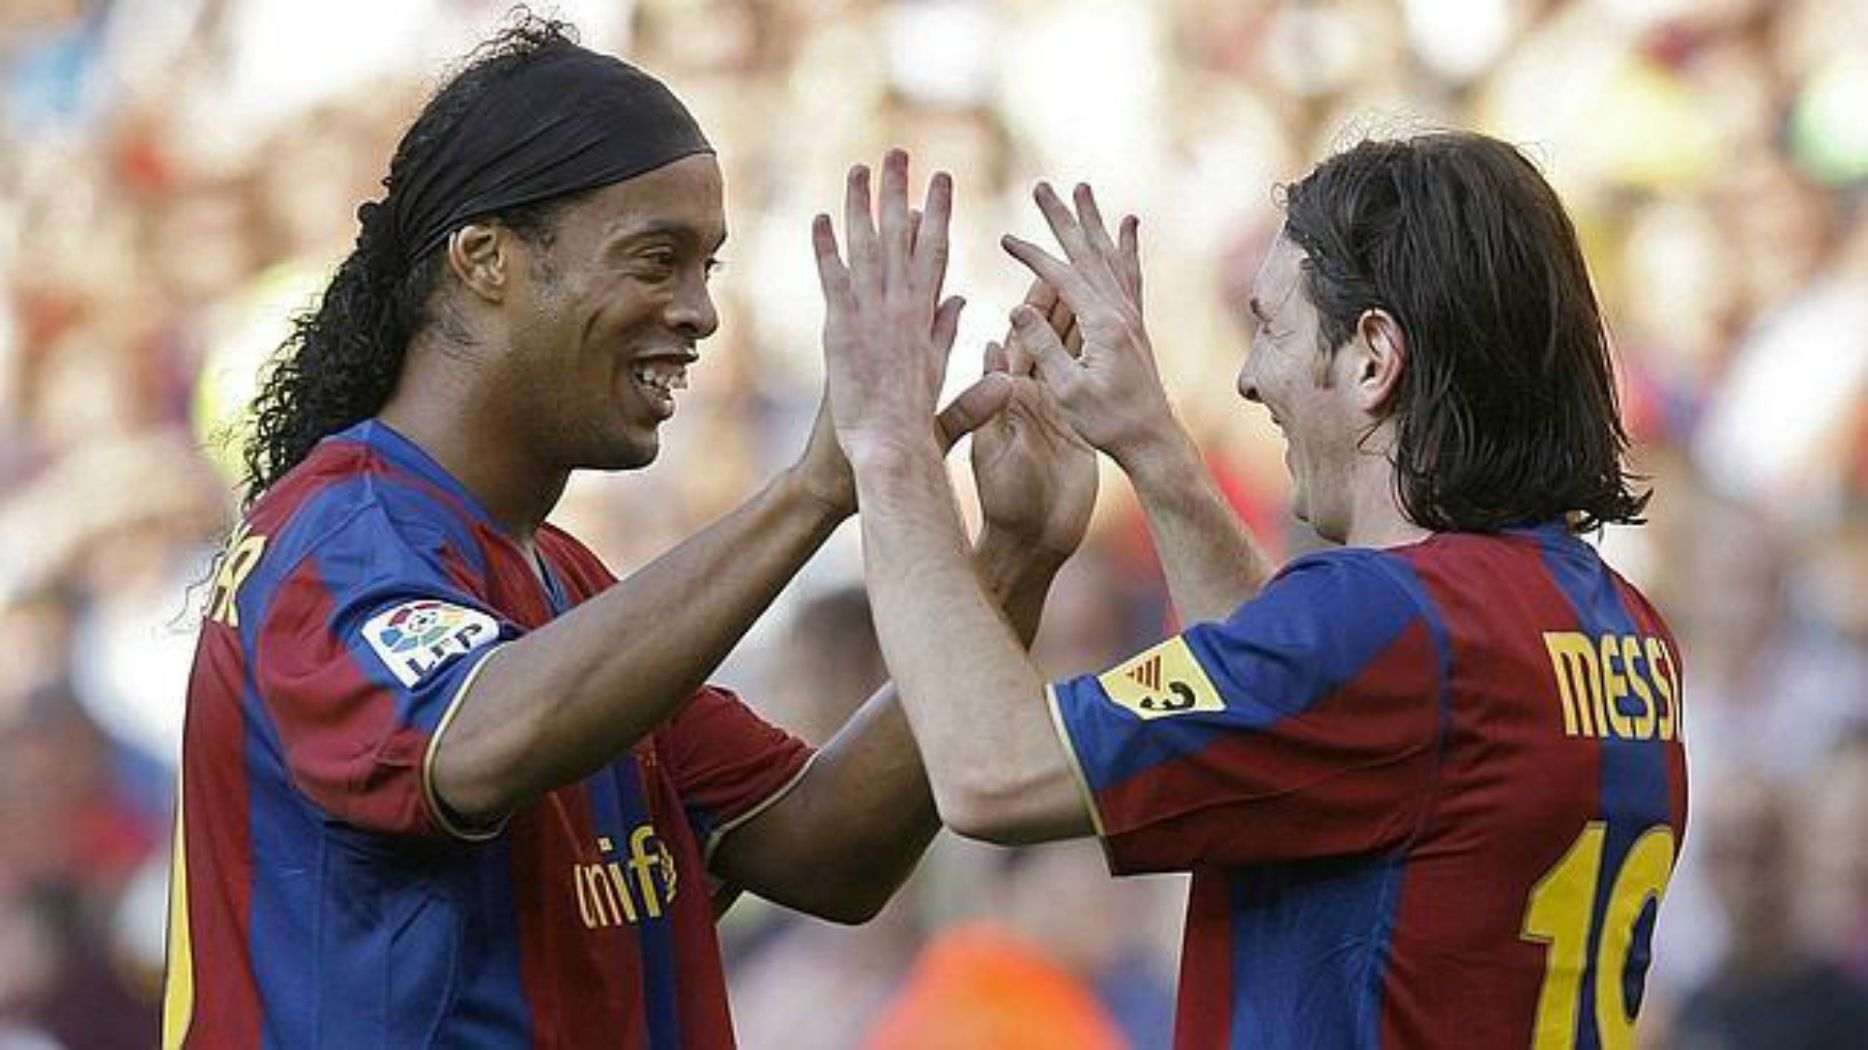 La emotiva carta de Ronaldinho a Messi